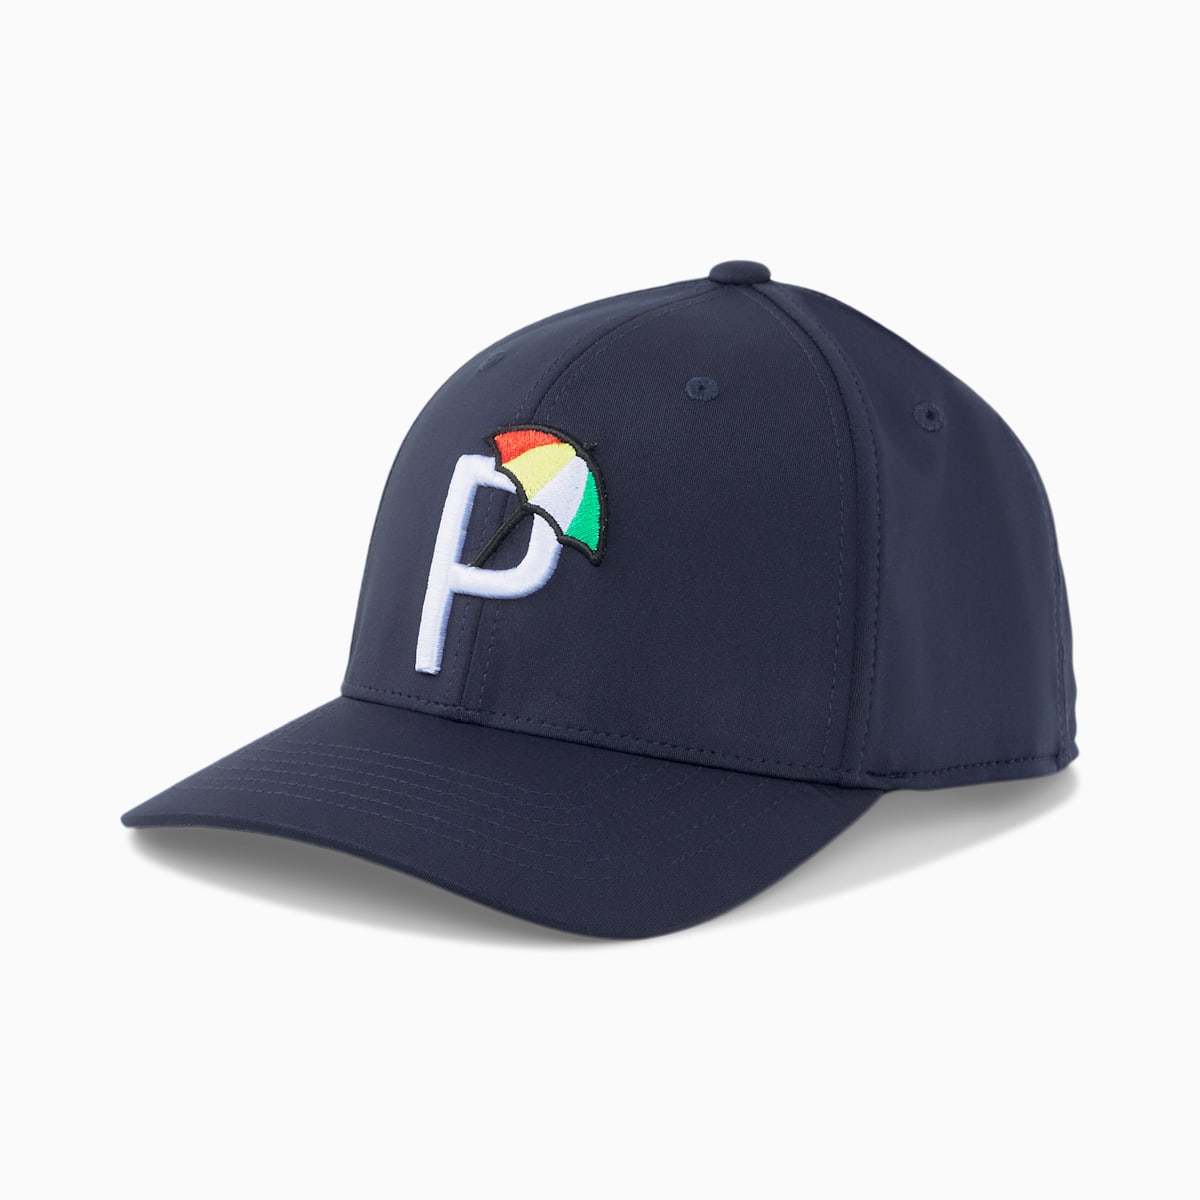 Palmer P Golf Cap